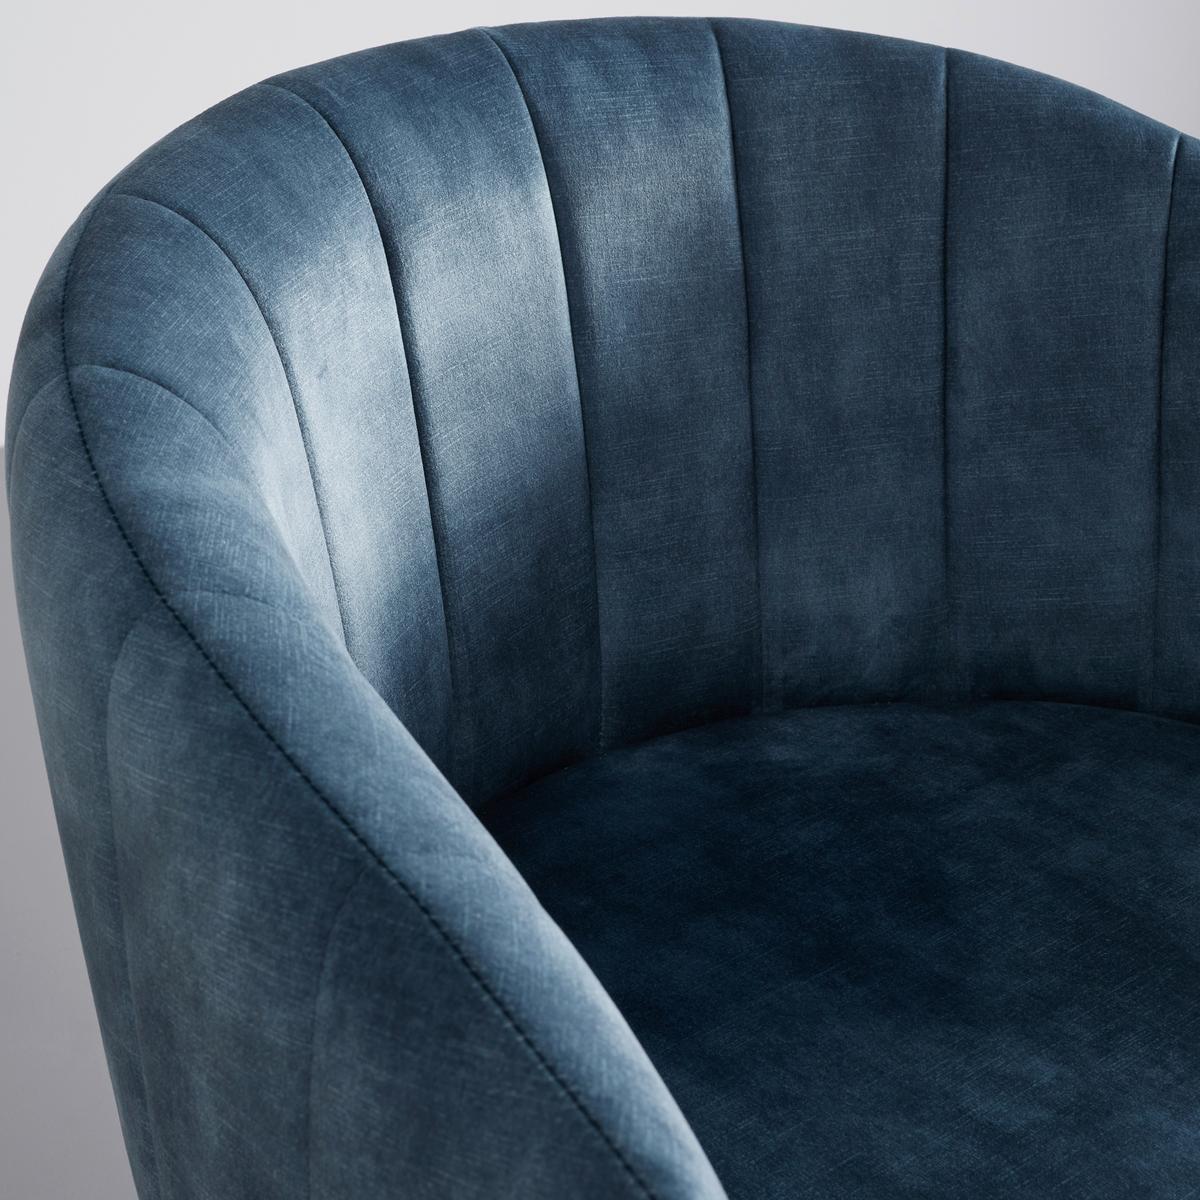 Möbelgeschäft Stuhl in Blau online bestellen